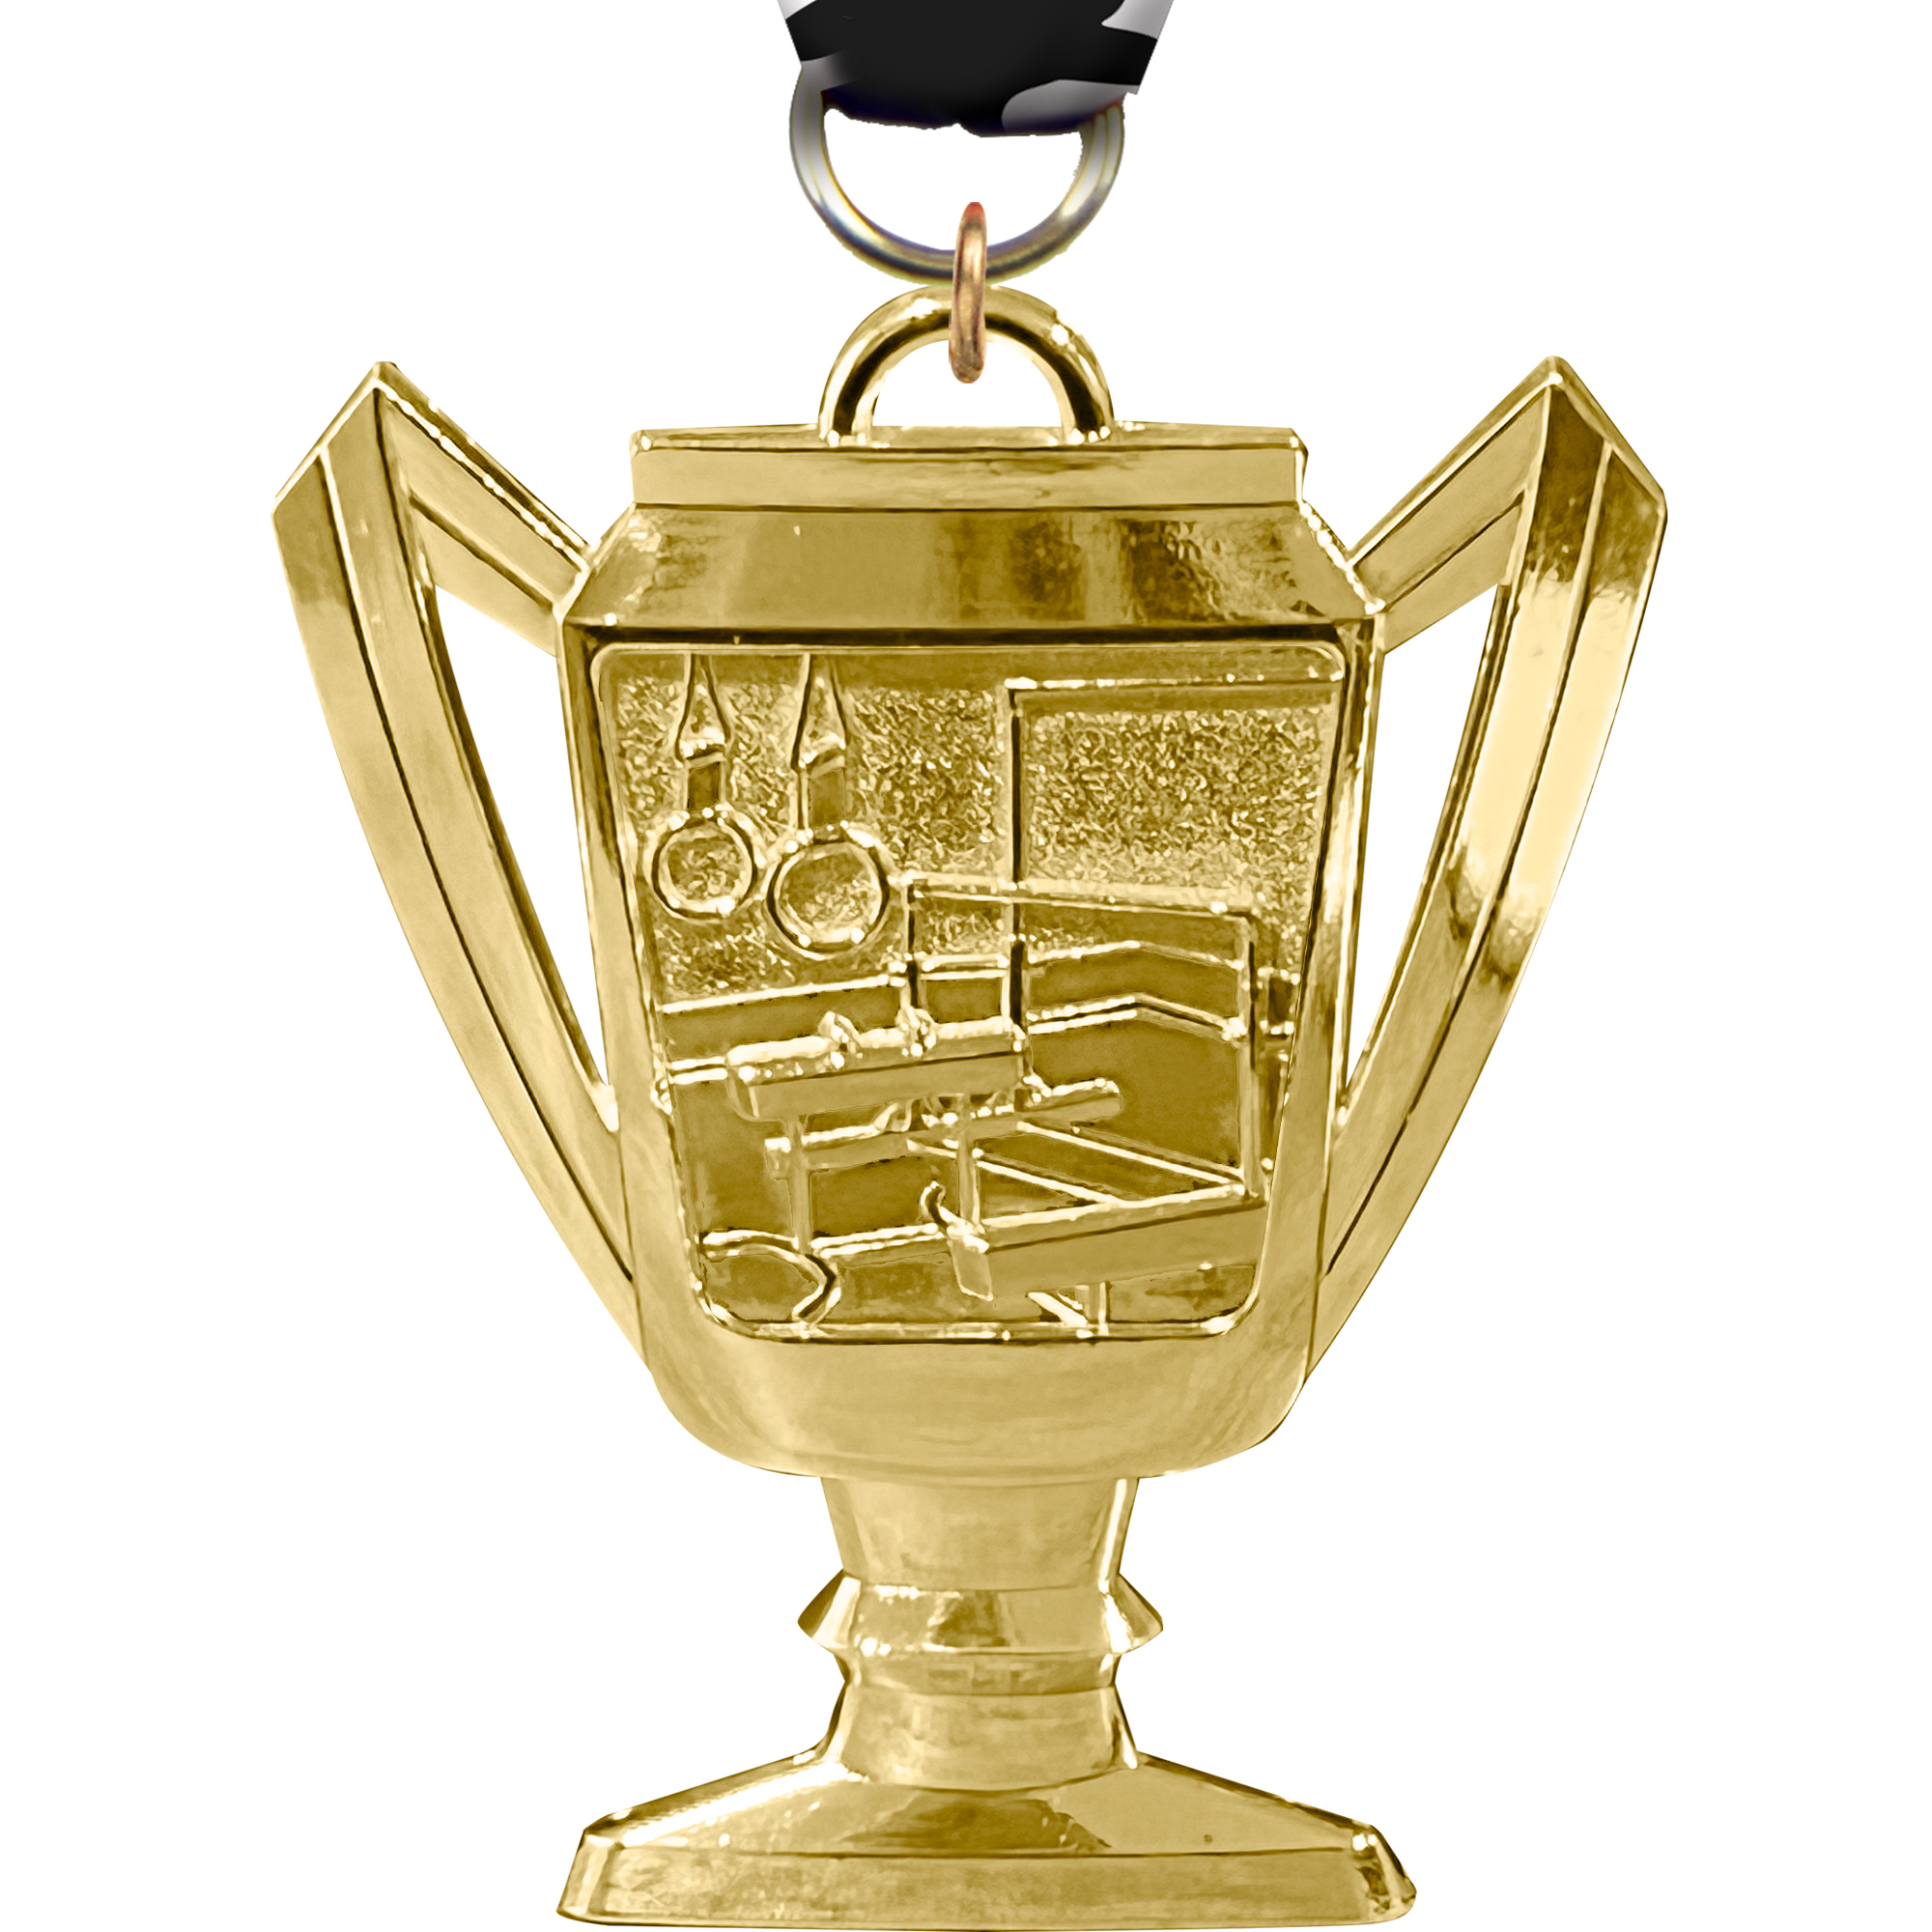 Gymnastics Bright Gold Trophy Cup Medal